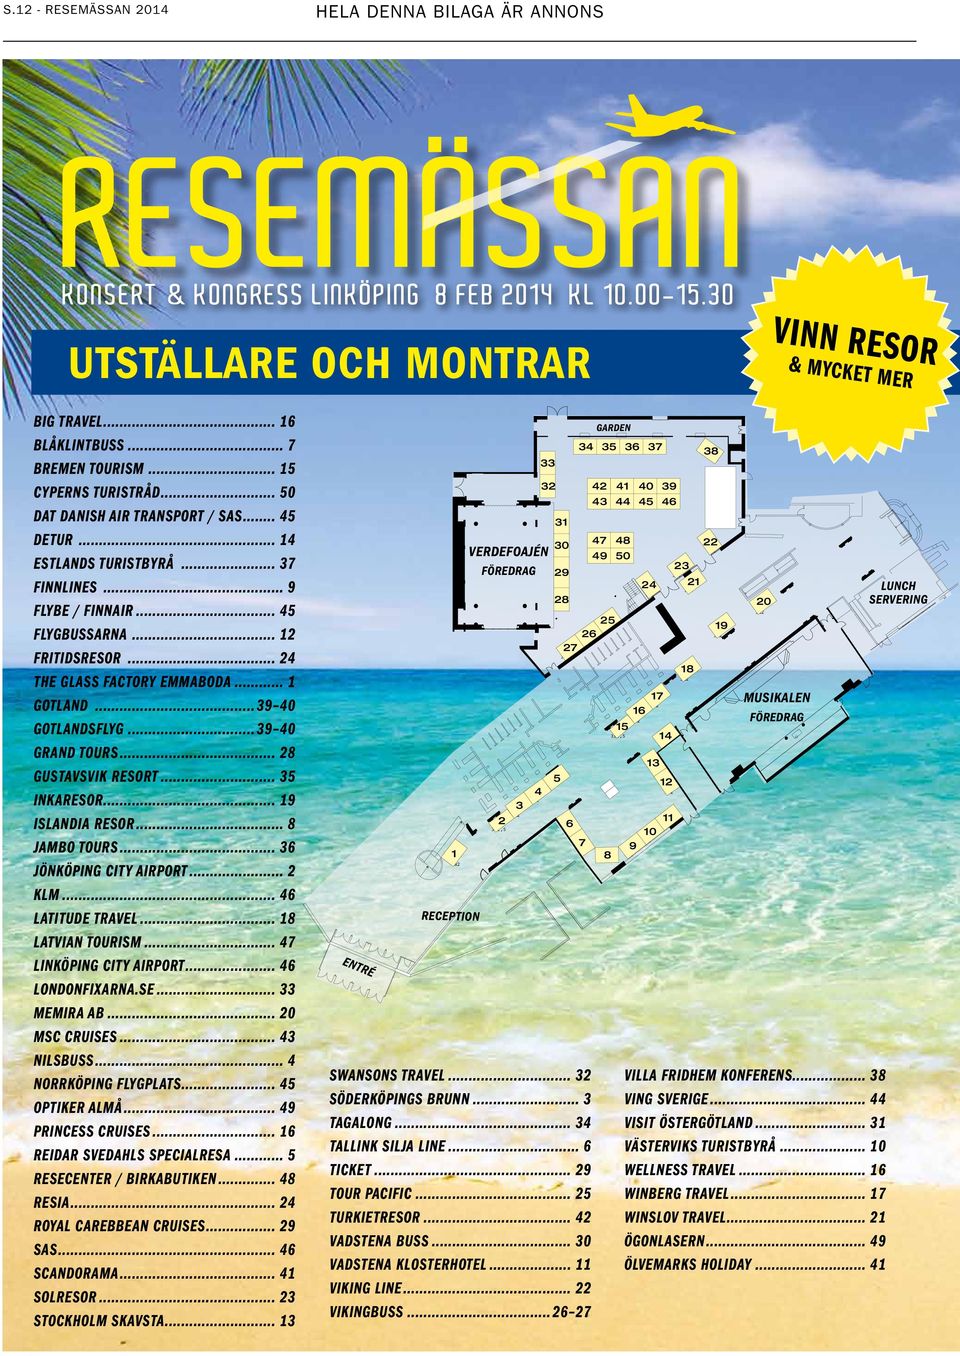 .. 24 The Glass Factory Emmaboda... 1 Gotland...39 40 Gotlandsflyg...39 40 Grand Tours... 28 Gustavsvik Resort... 35 Inkaresor... 19 Islandia Resor... 8 Jambo Tours... 36 Jönköping city Airport.